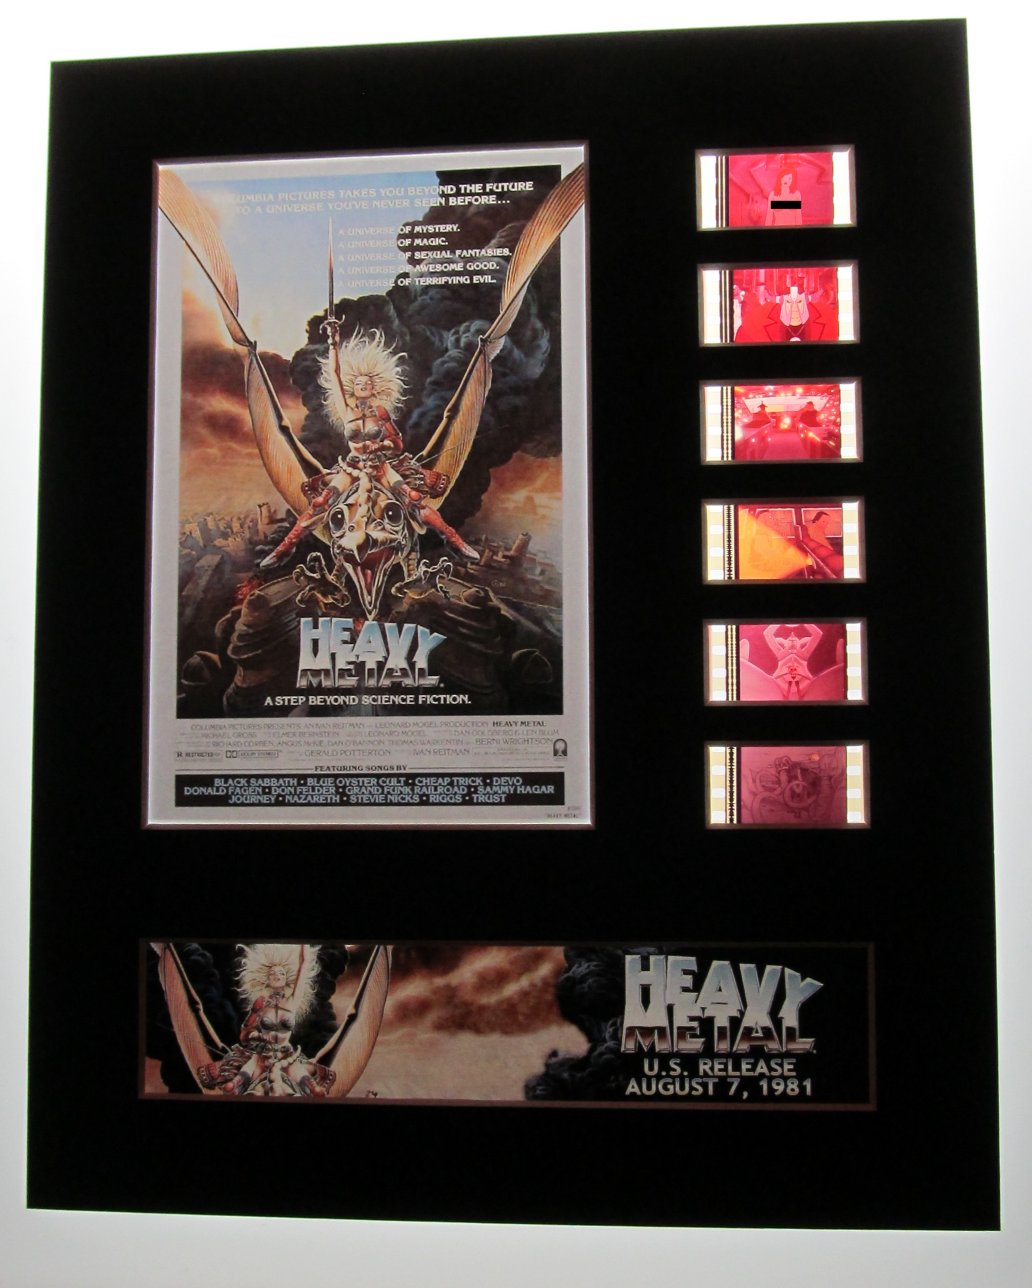 HEAVY METAL Adult Animation 35mm Movie Film Cell Display 8x10 Presentation